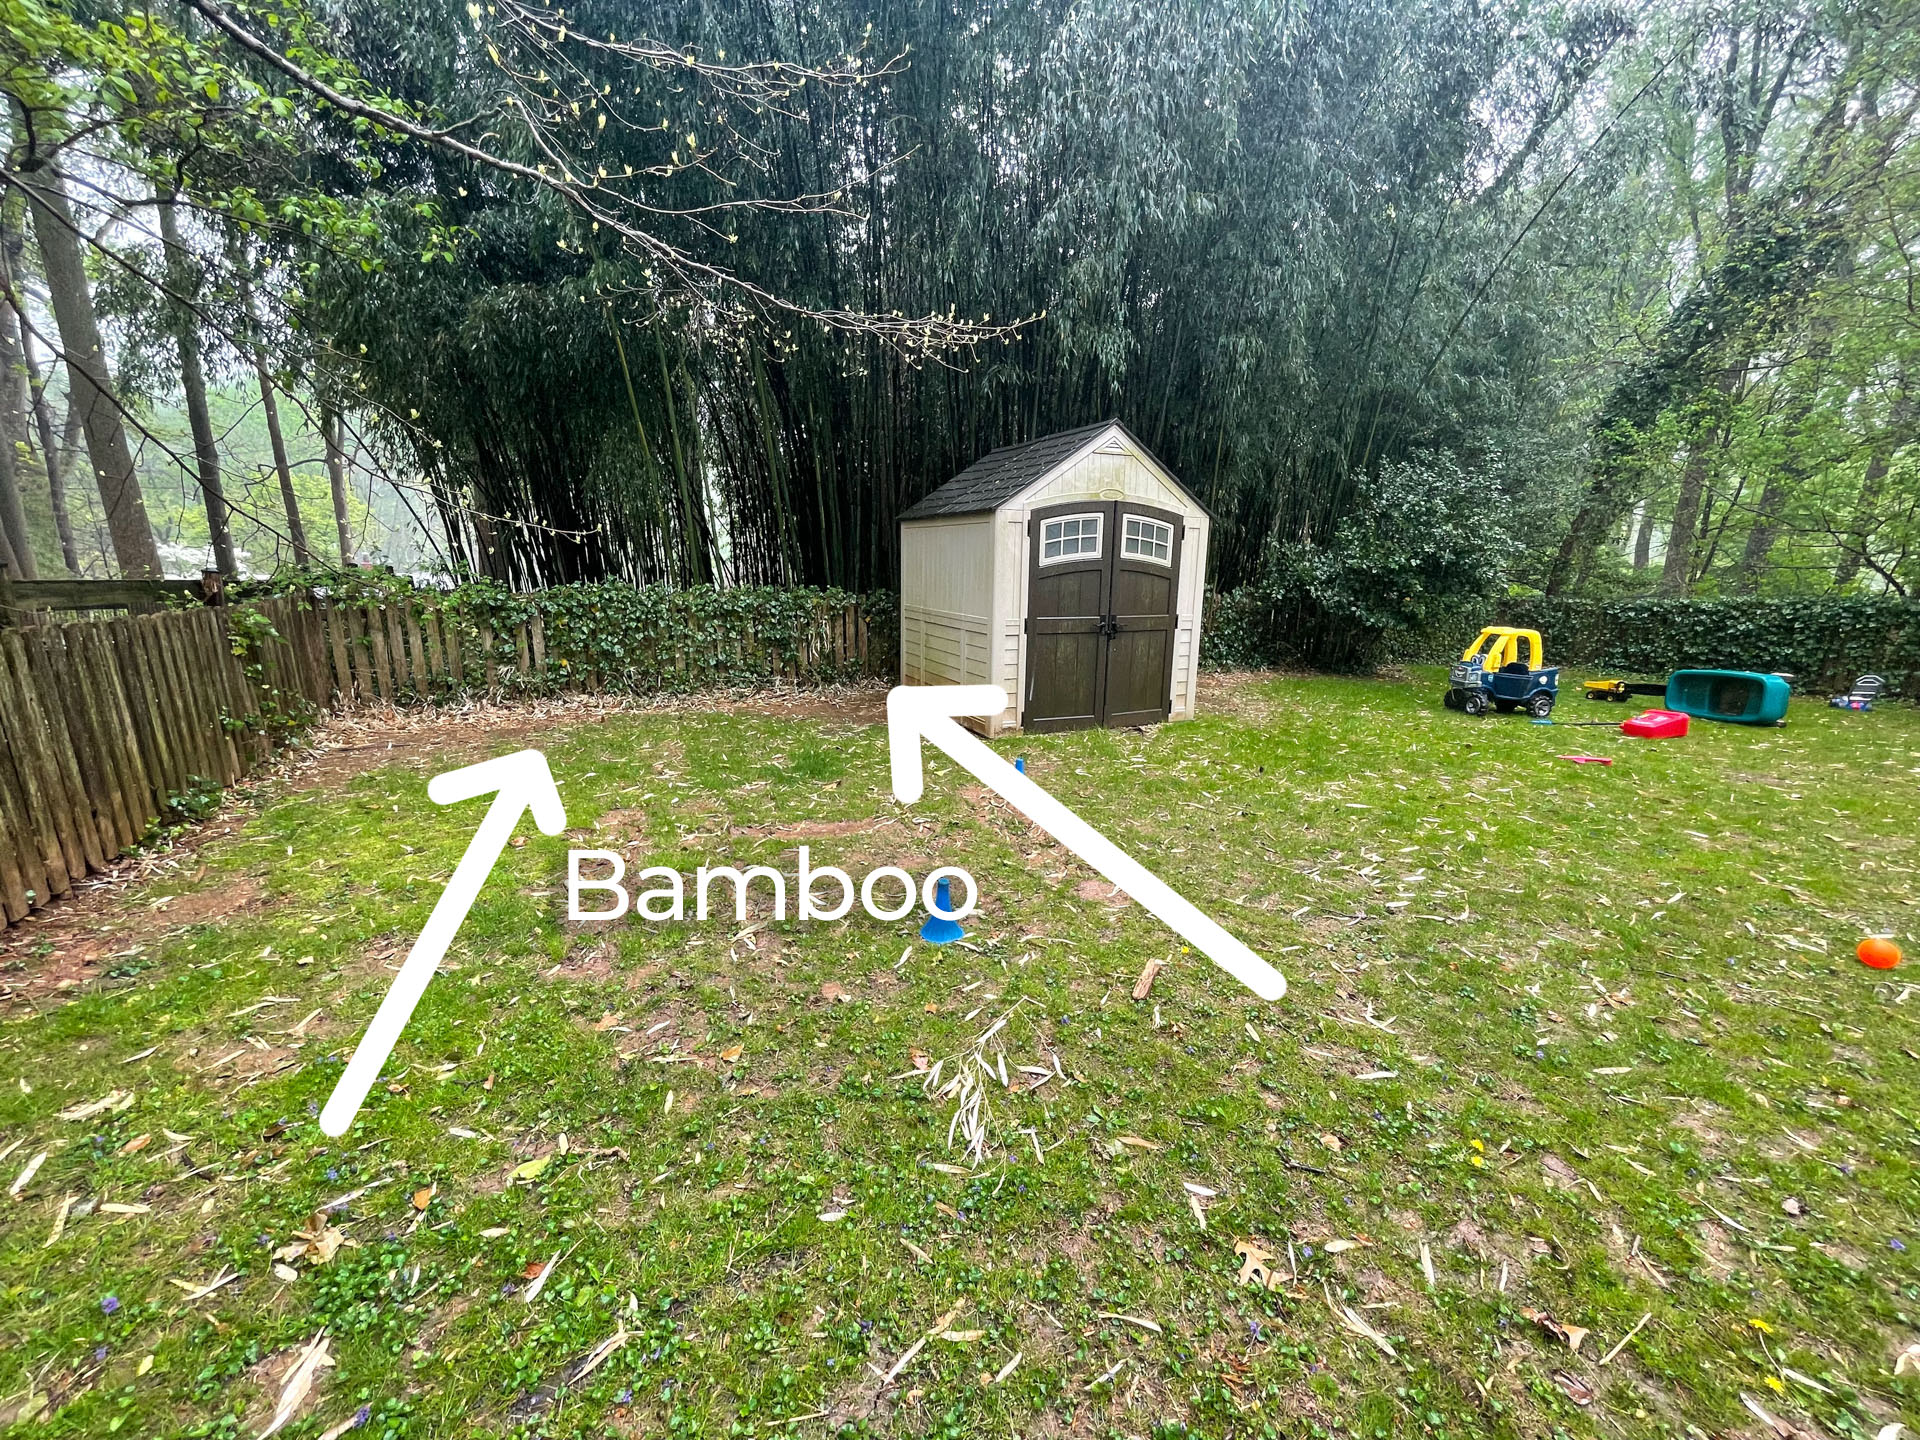 Bamboo in a backyard in Kensington, MD.